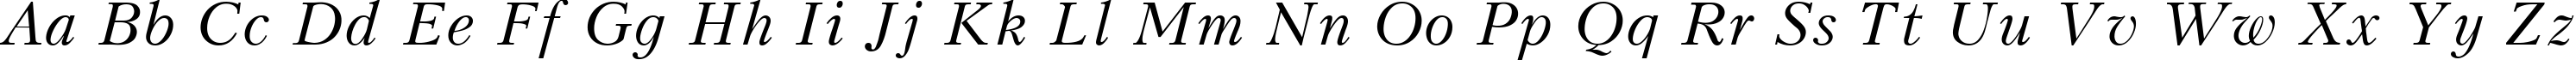 Пример написания английского алфавита шрифтом Kudrashov Italic:001.001